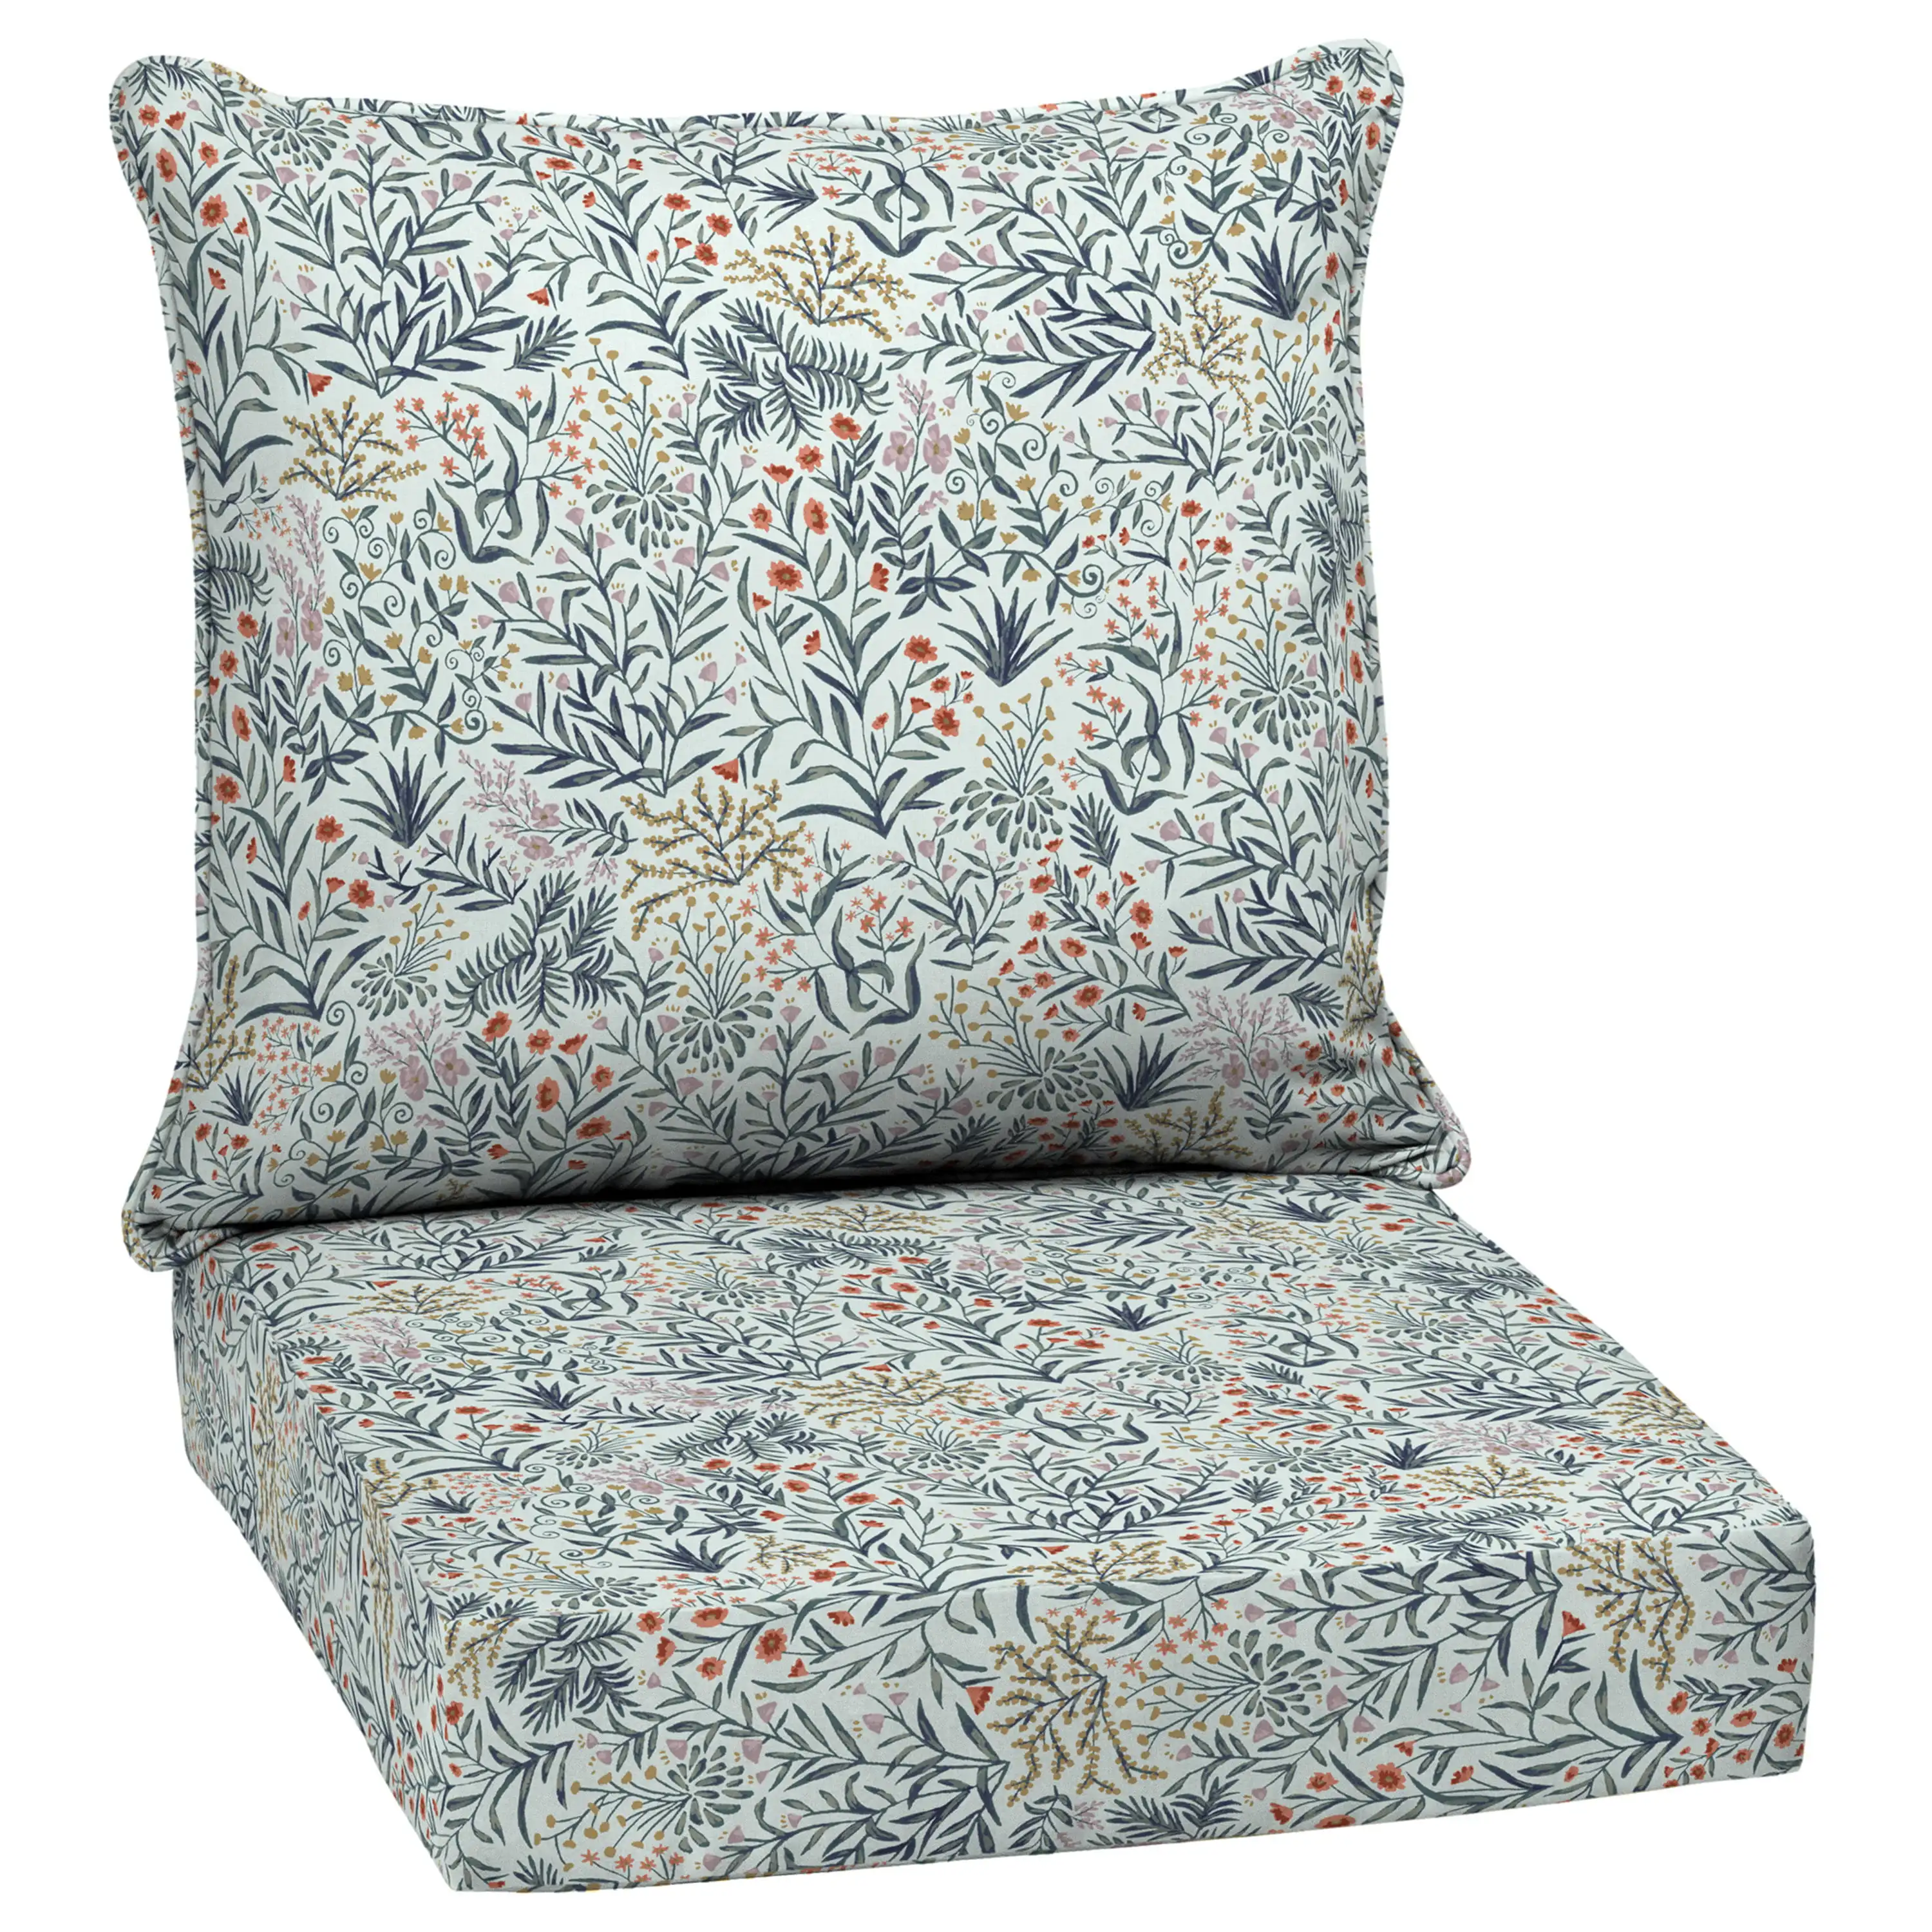 

Arden Selections Outdoor Deep Seating Cushion Set 24 x 24, Pistachio Botanical